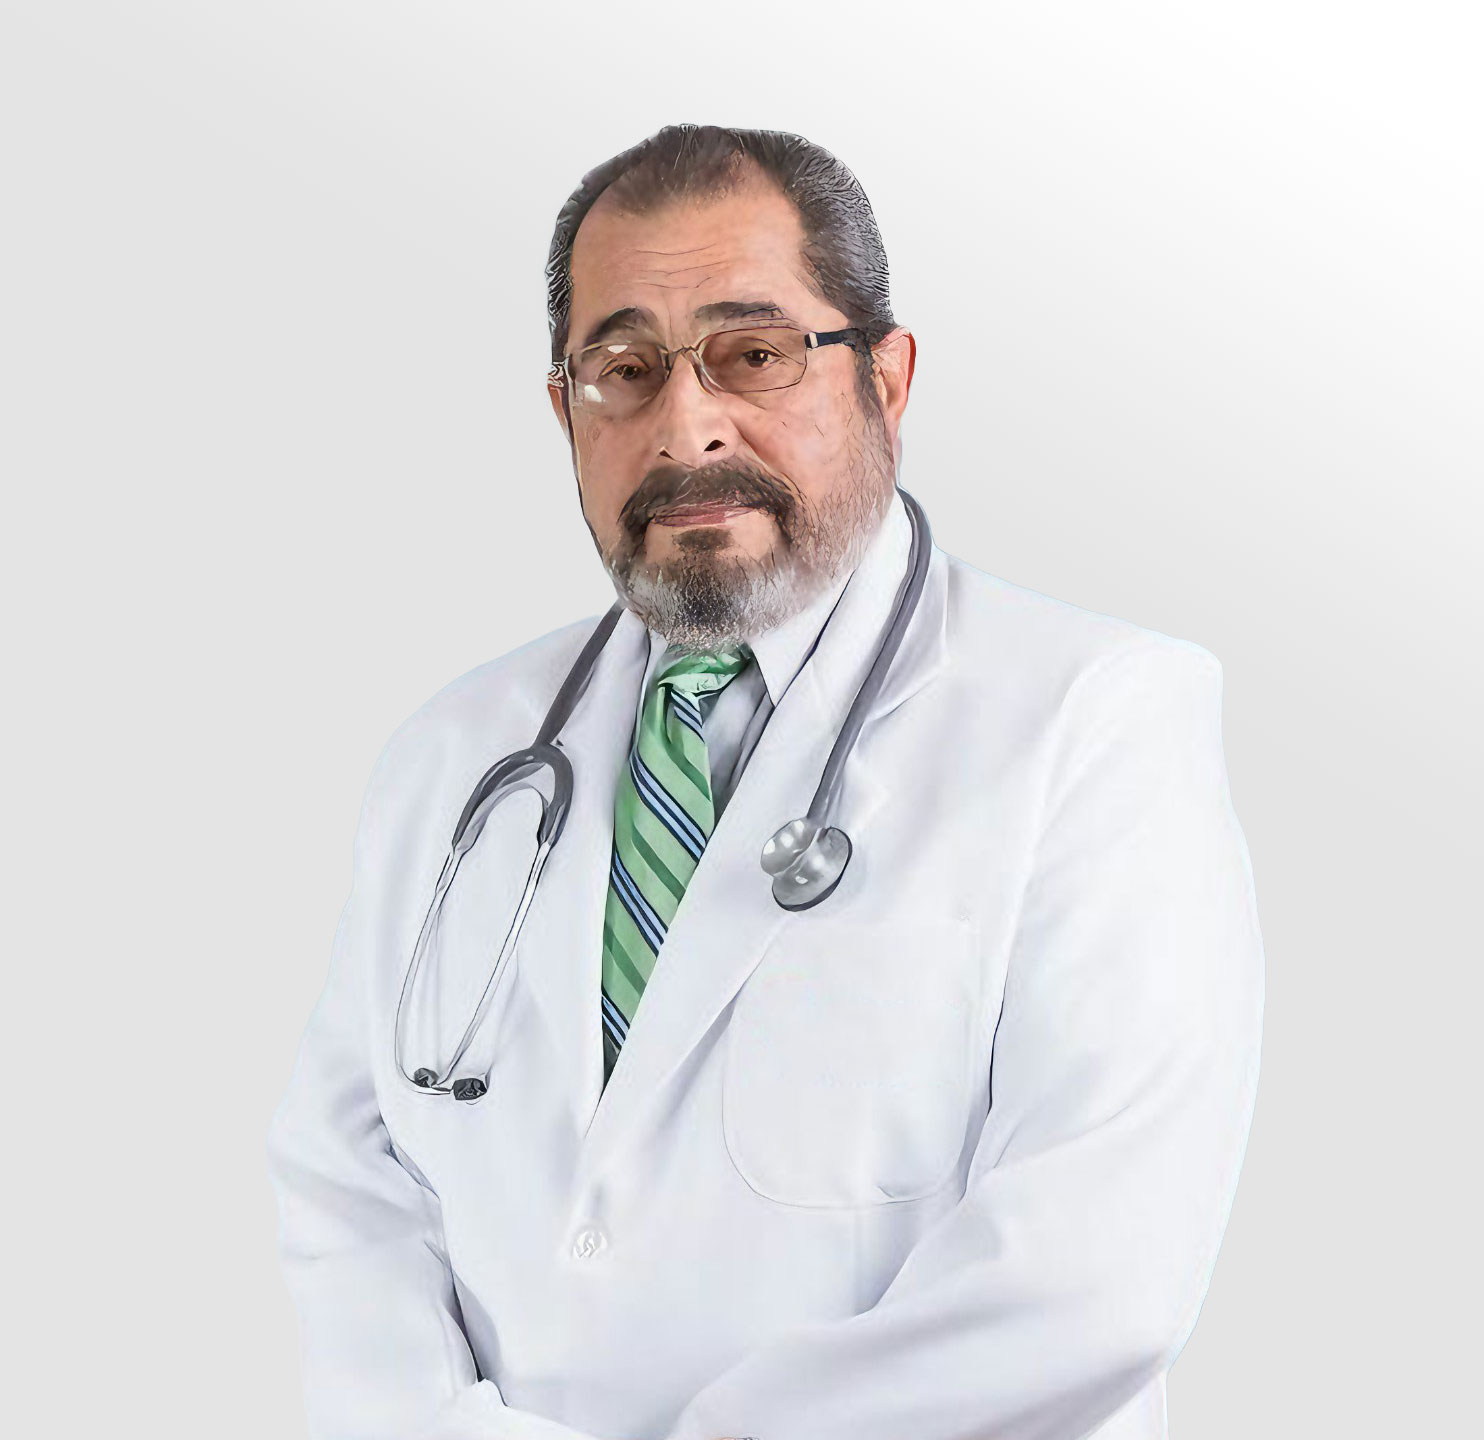 Foto del Dr. César Carozzi, Director médico del Grupo Hiperbárica